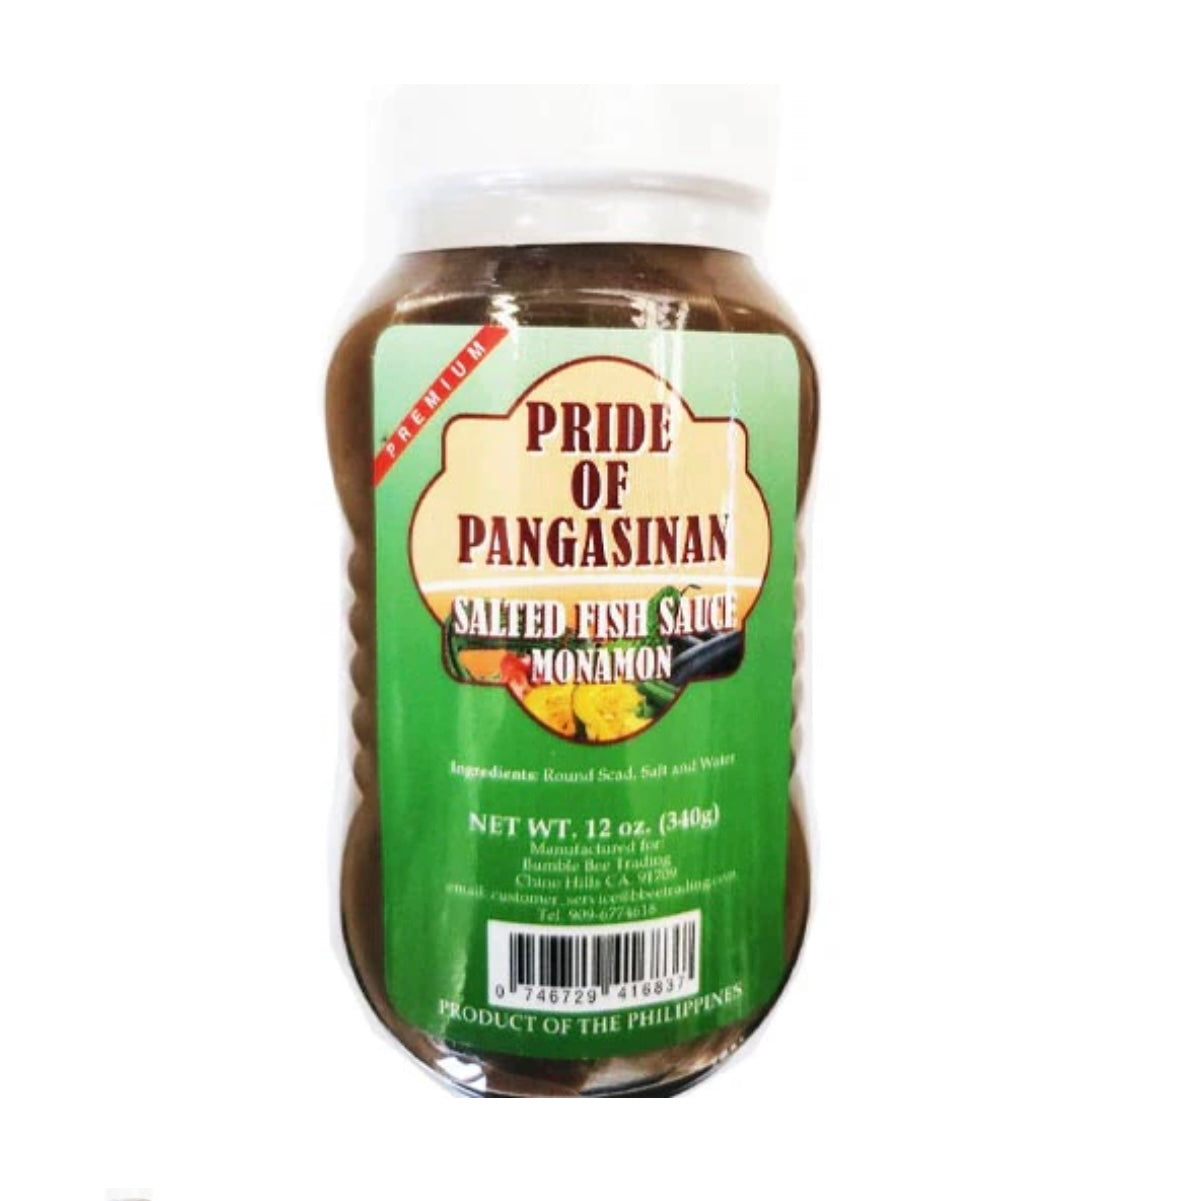 Pride of Pangasinan Salted Fish Sauce Monamon